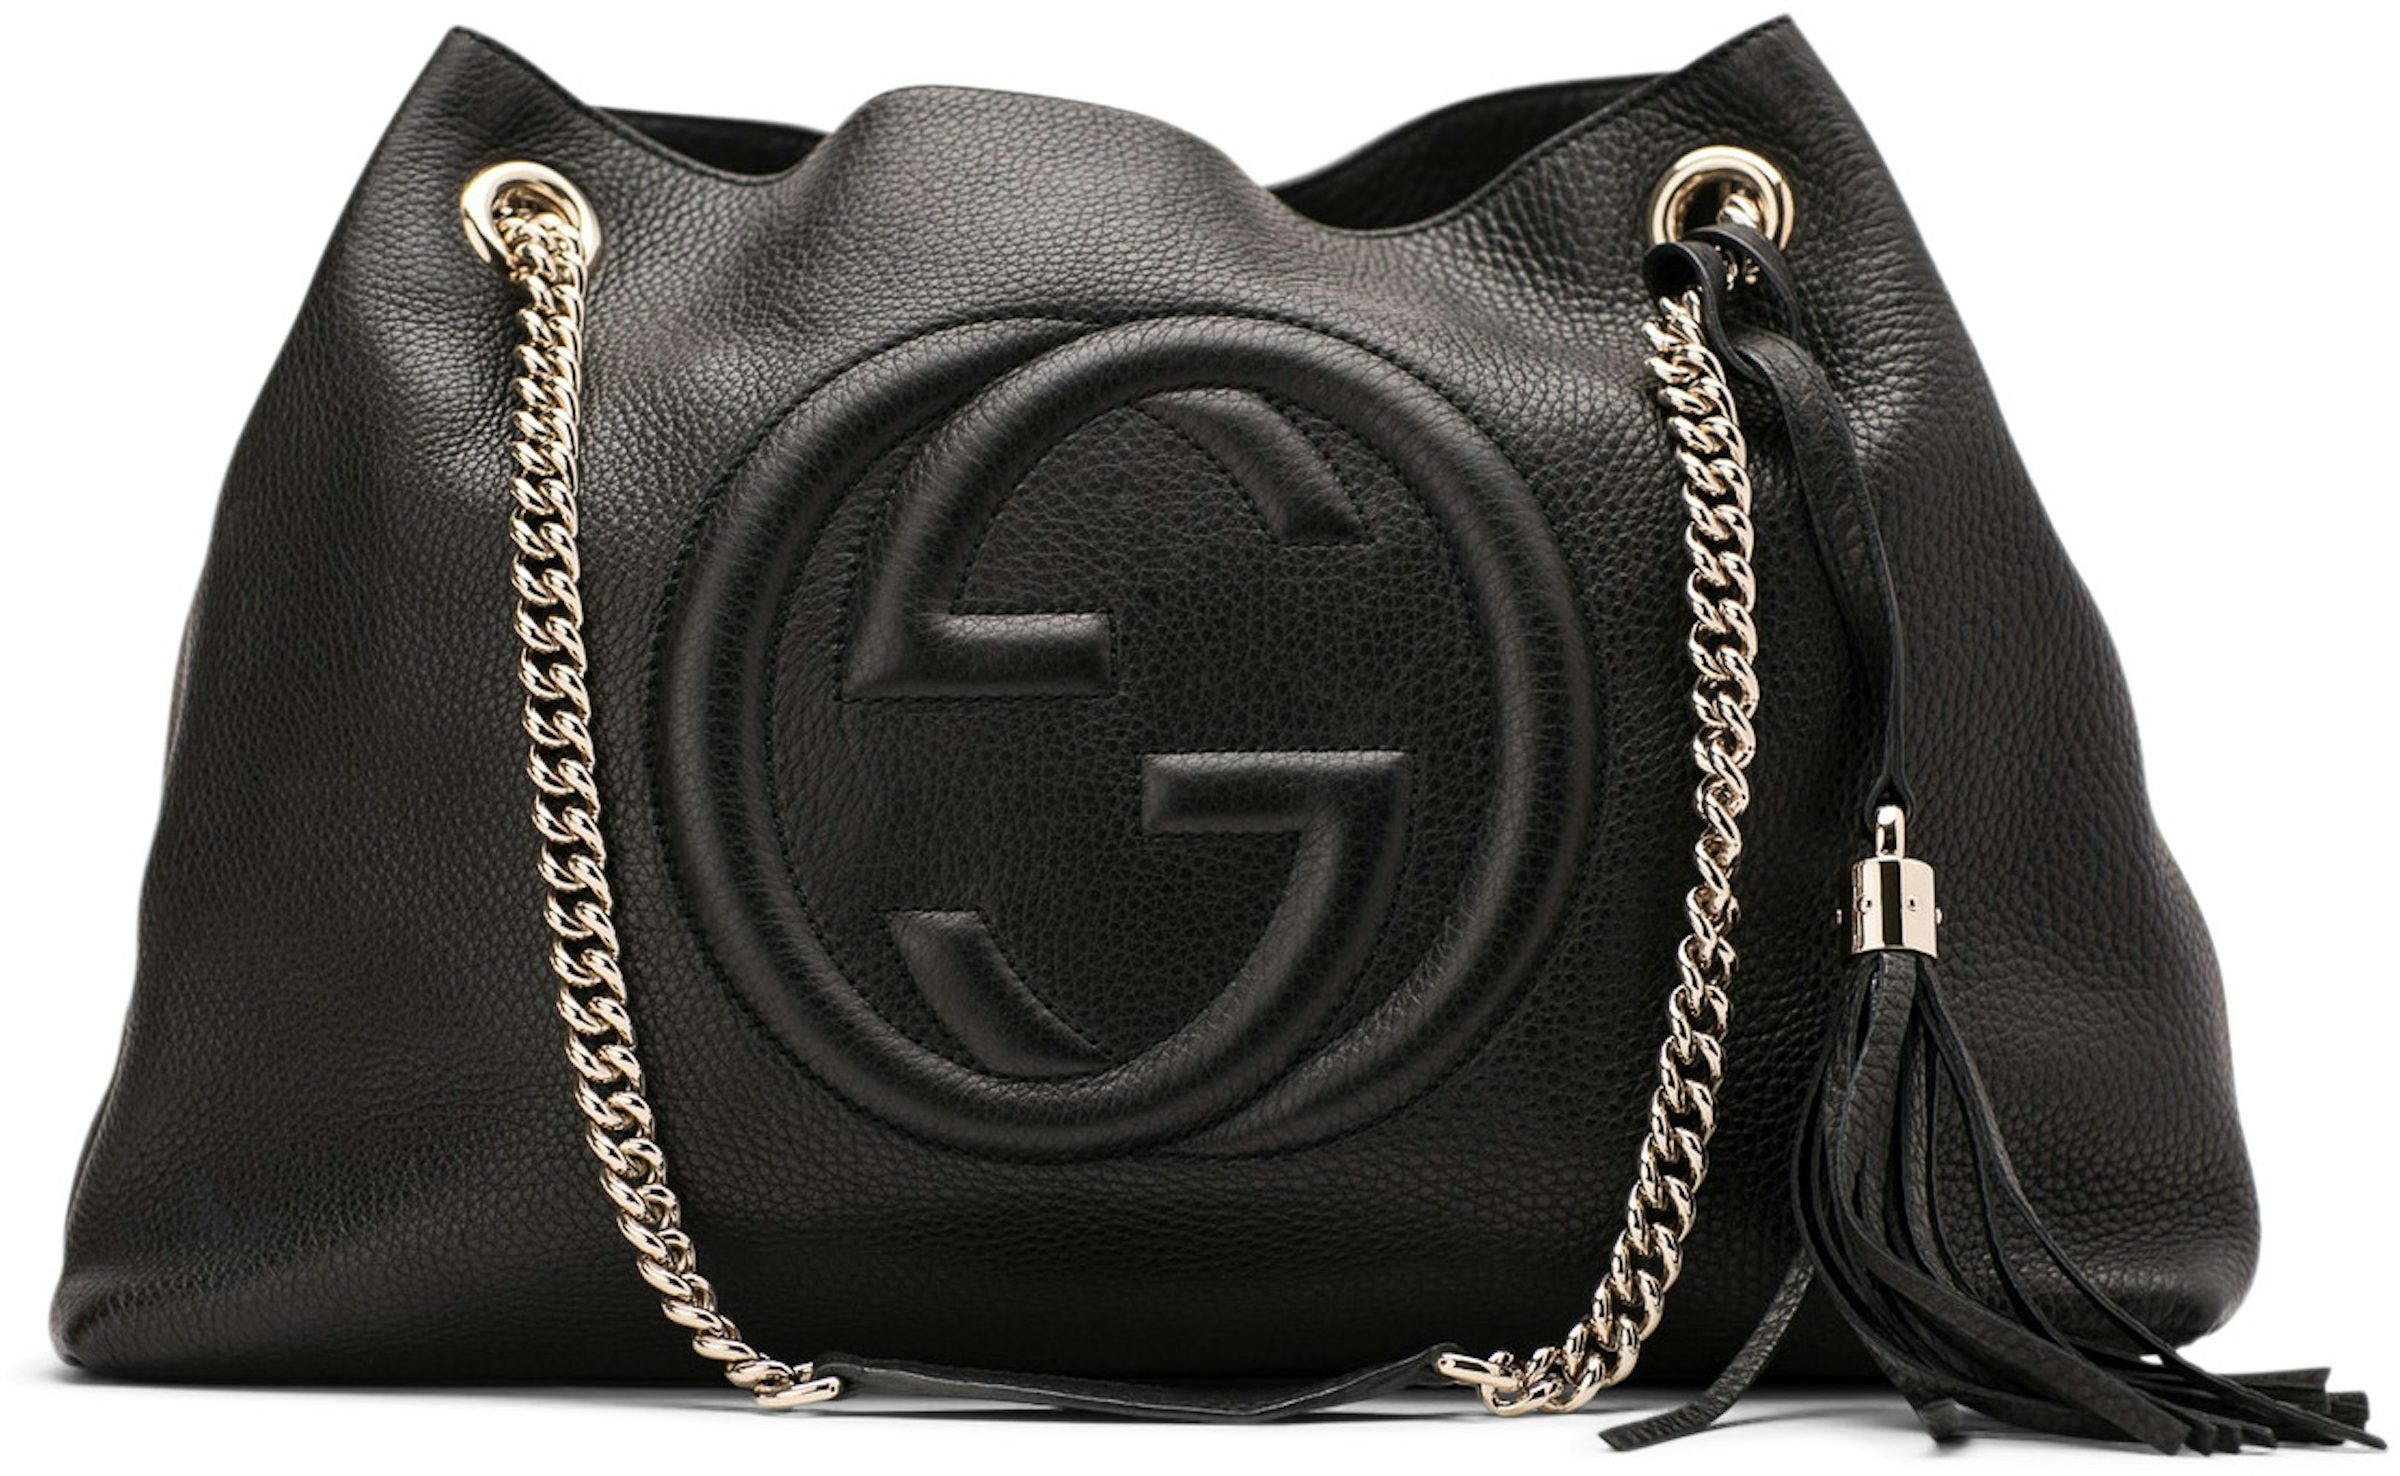 Gucci Interlocking G Sun Orange Leather Chain Crossbody Shoulder Bag